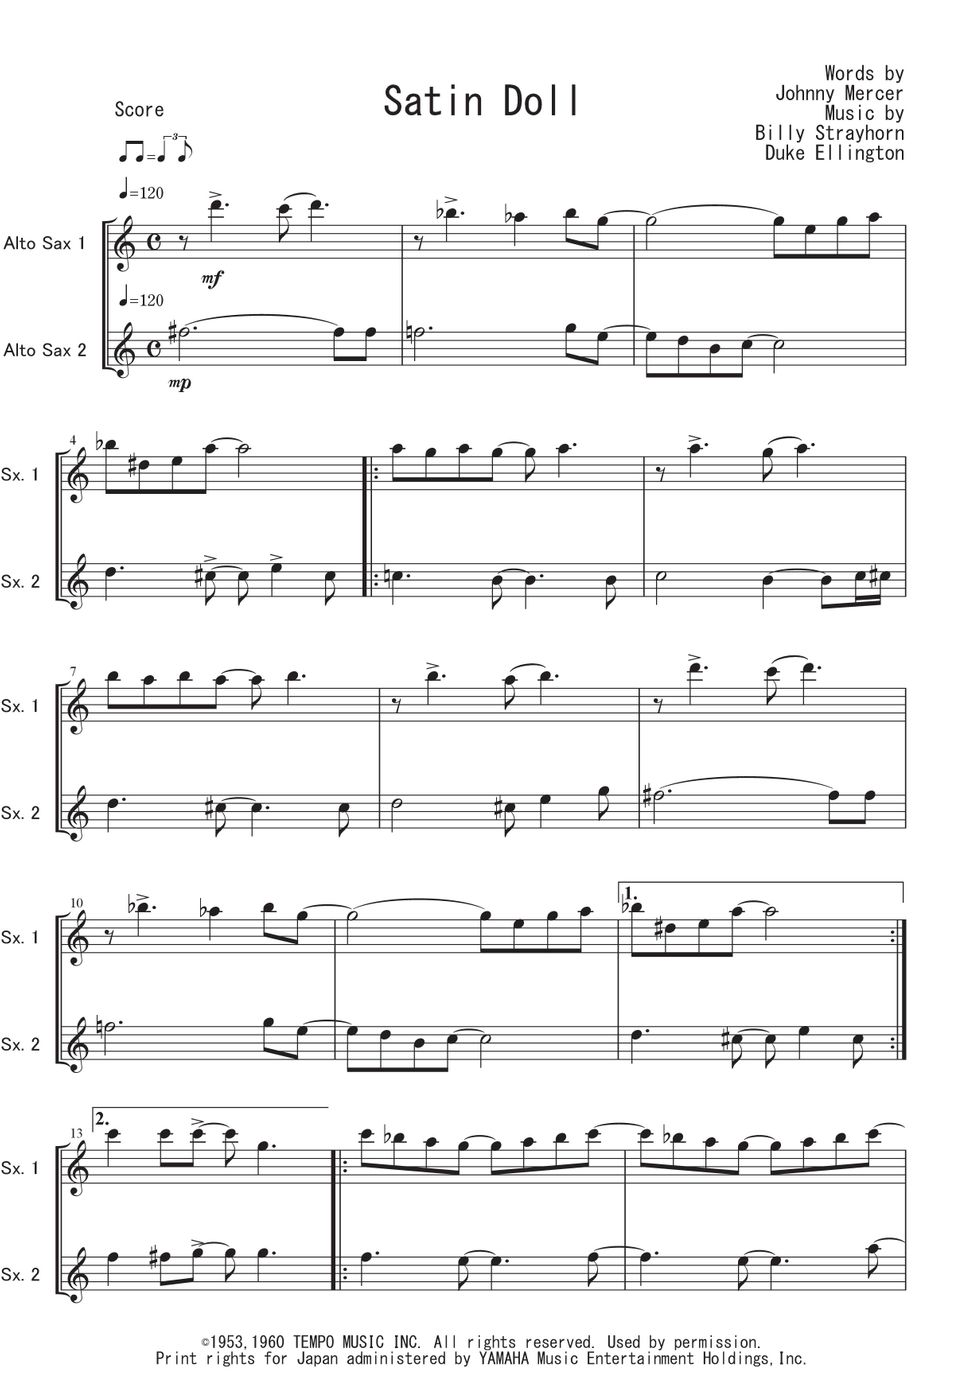 Ellington/Strayhorn - Satin Doll (A.Sax二重奏) by Peony